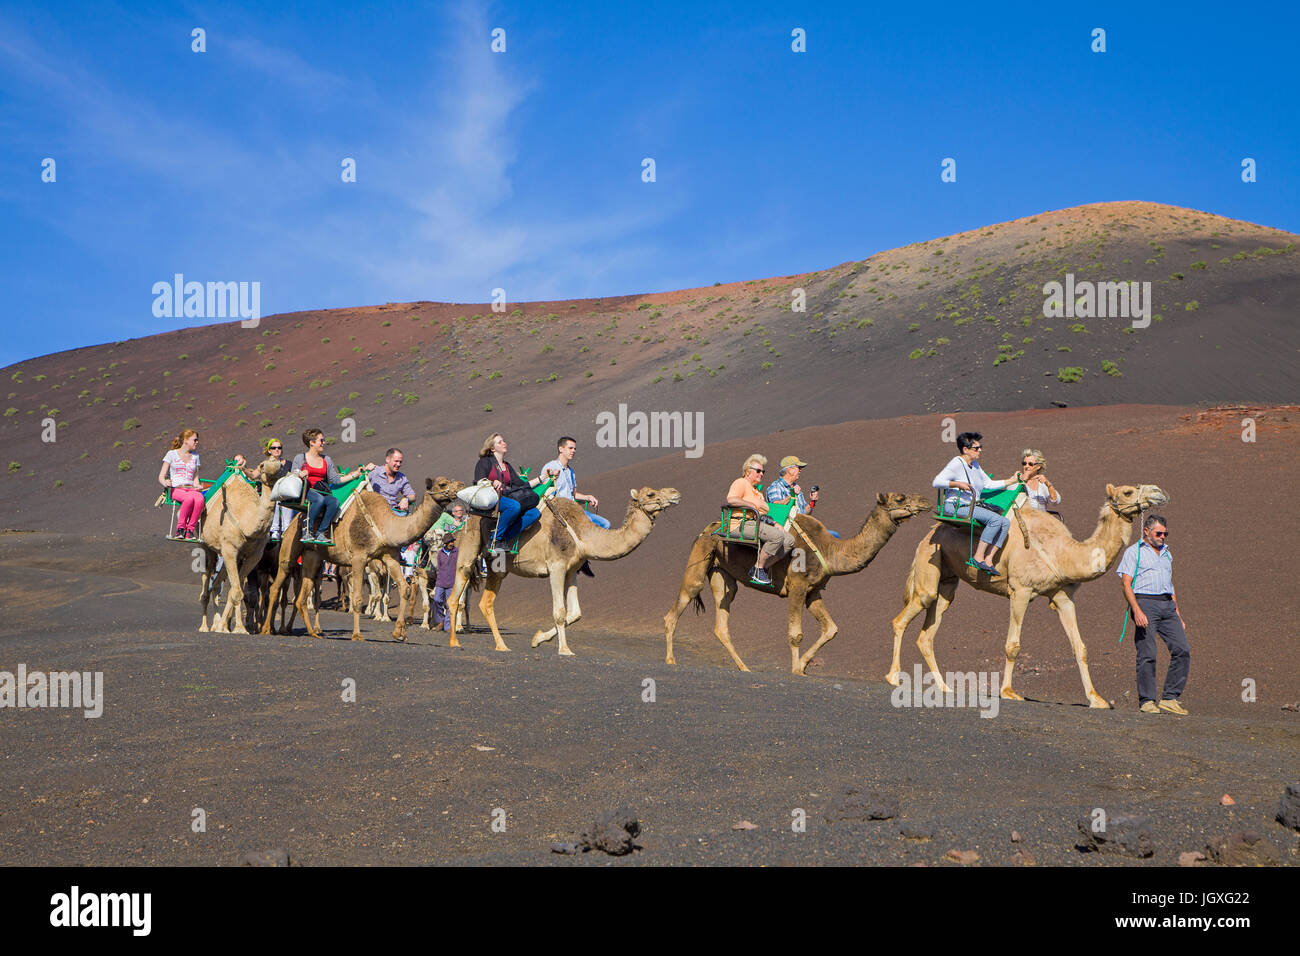 Touristen auf dromedaren, einhoeckriges kamel (camelus dromedarius) im Nationalpark timanfaya, Lanzarote, kanarische inseln, europa | les touristes sur drom Banque D'Images